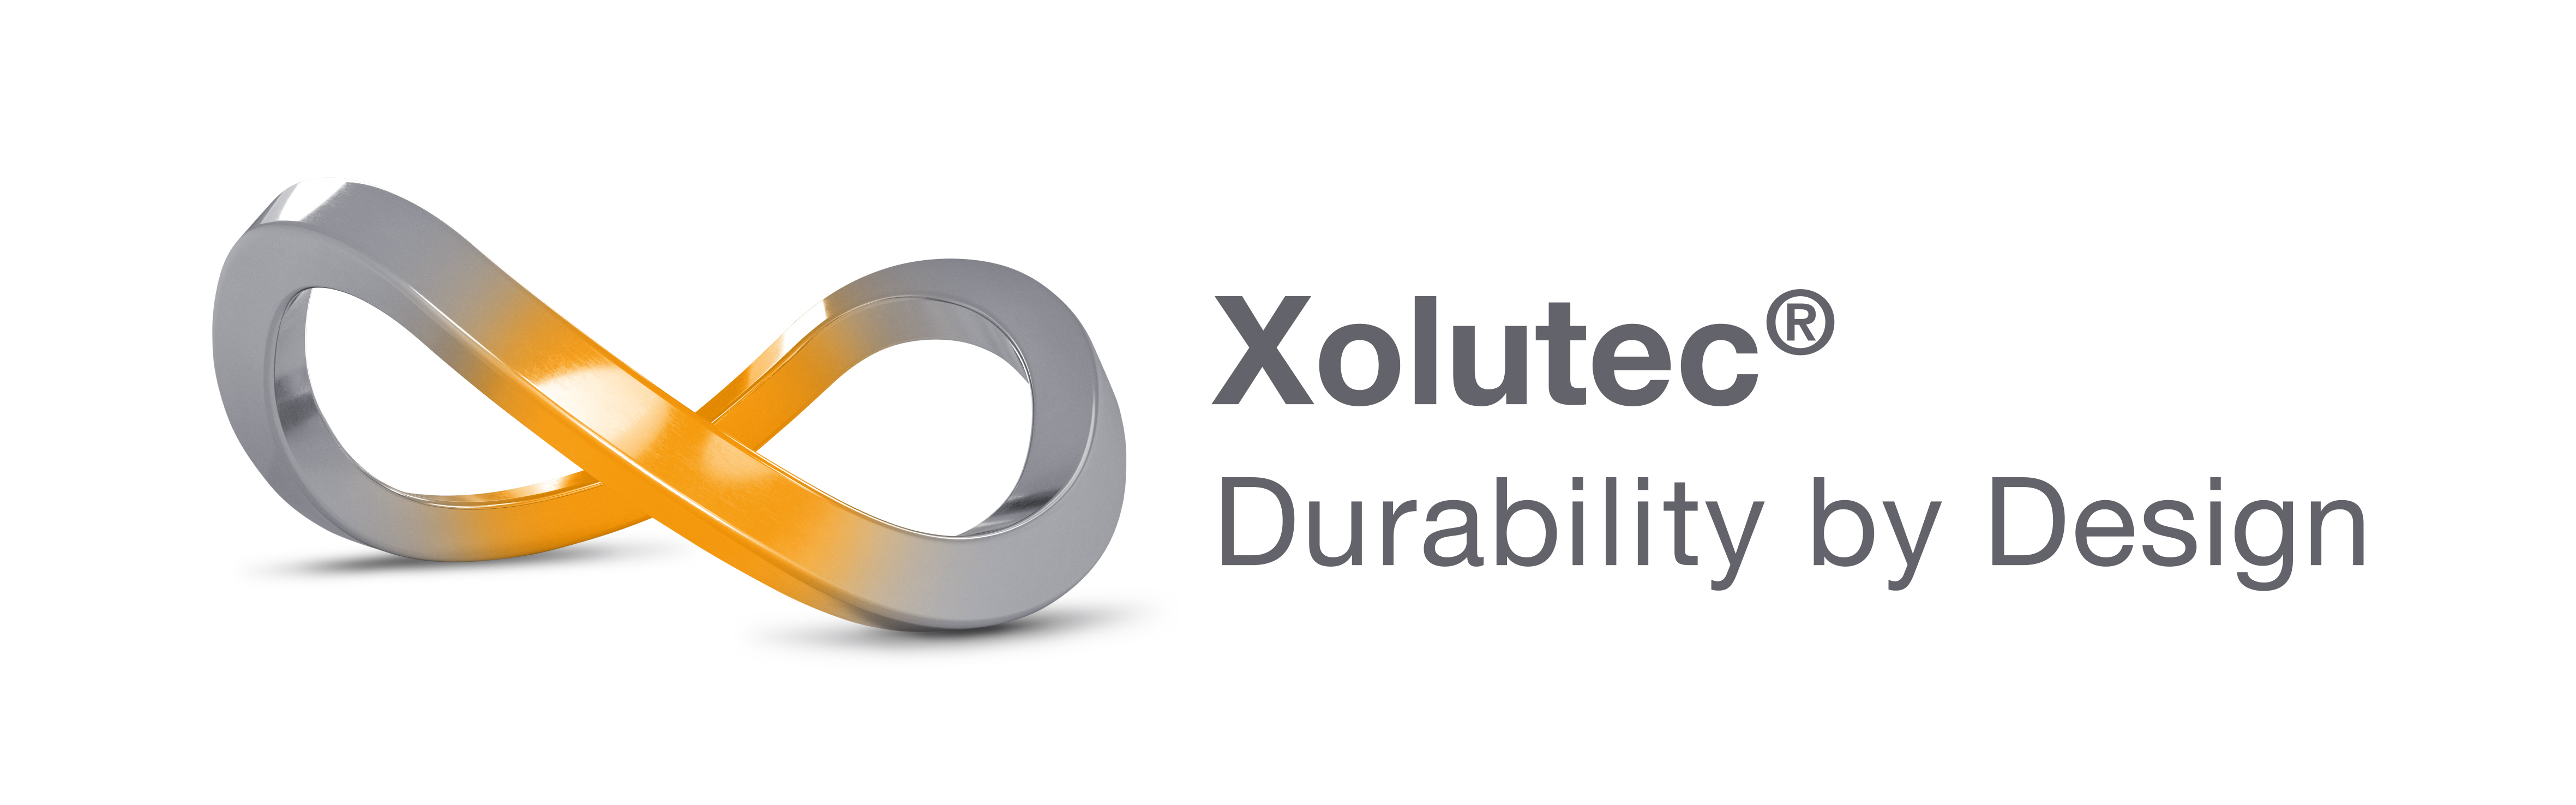 Xolutec - Durability by Design